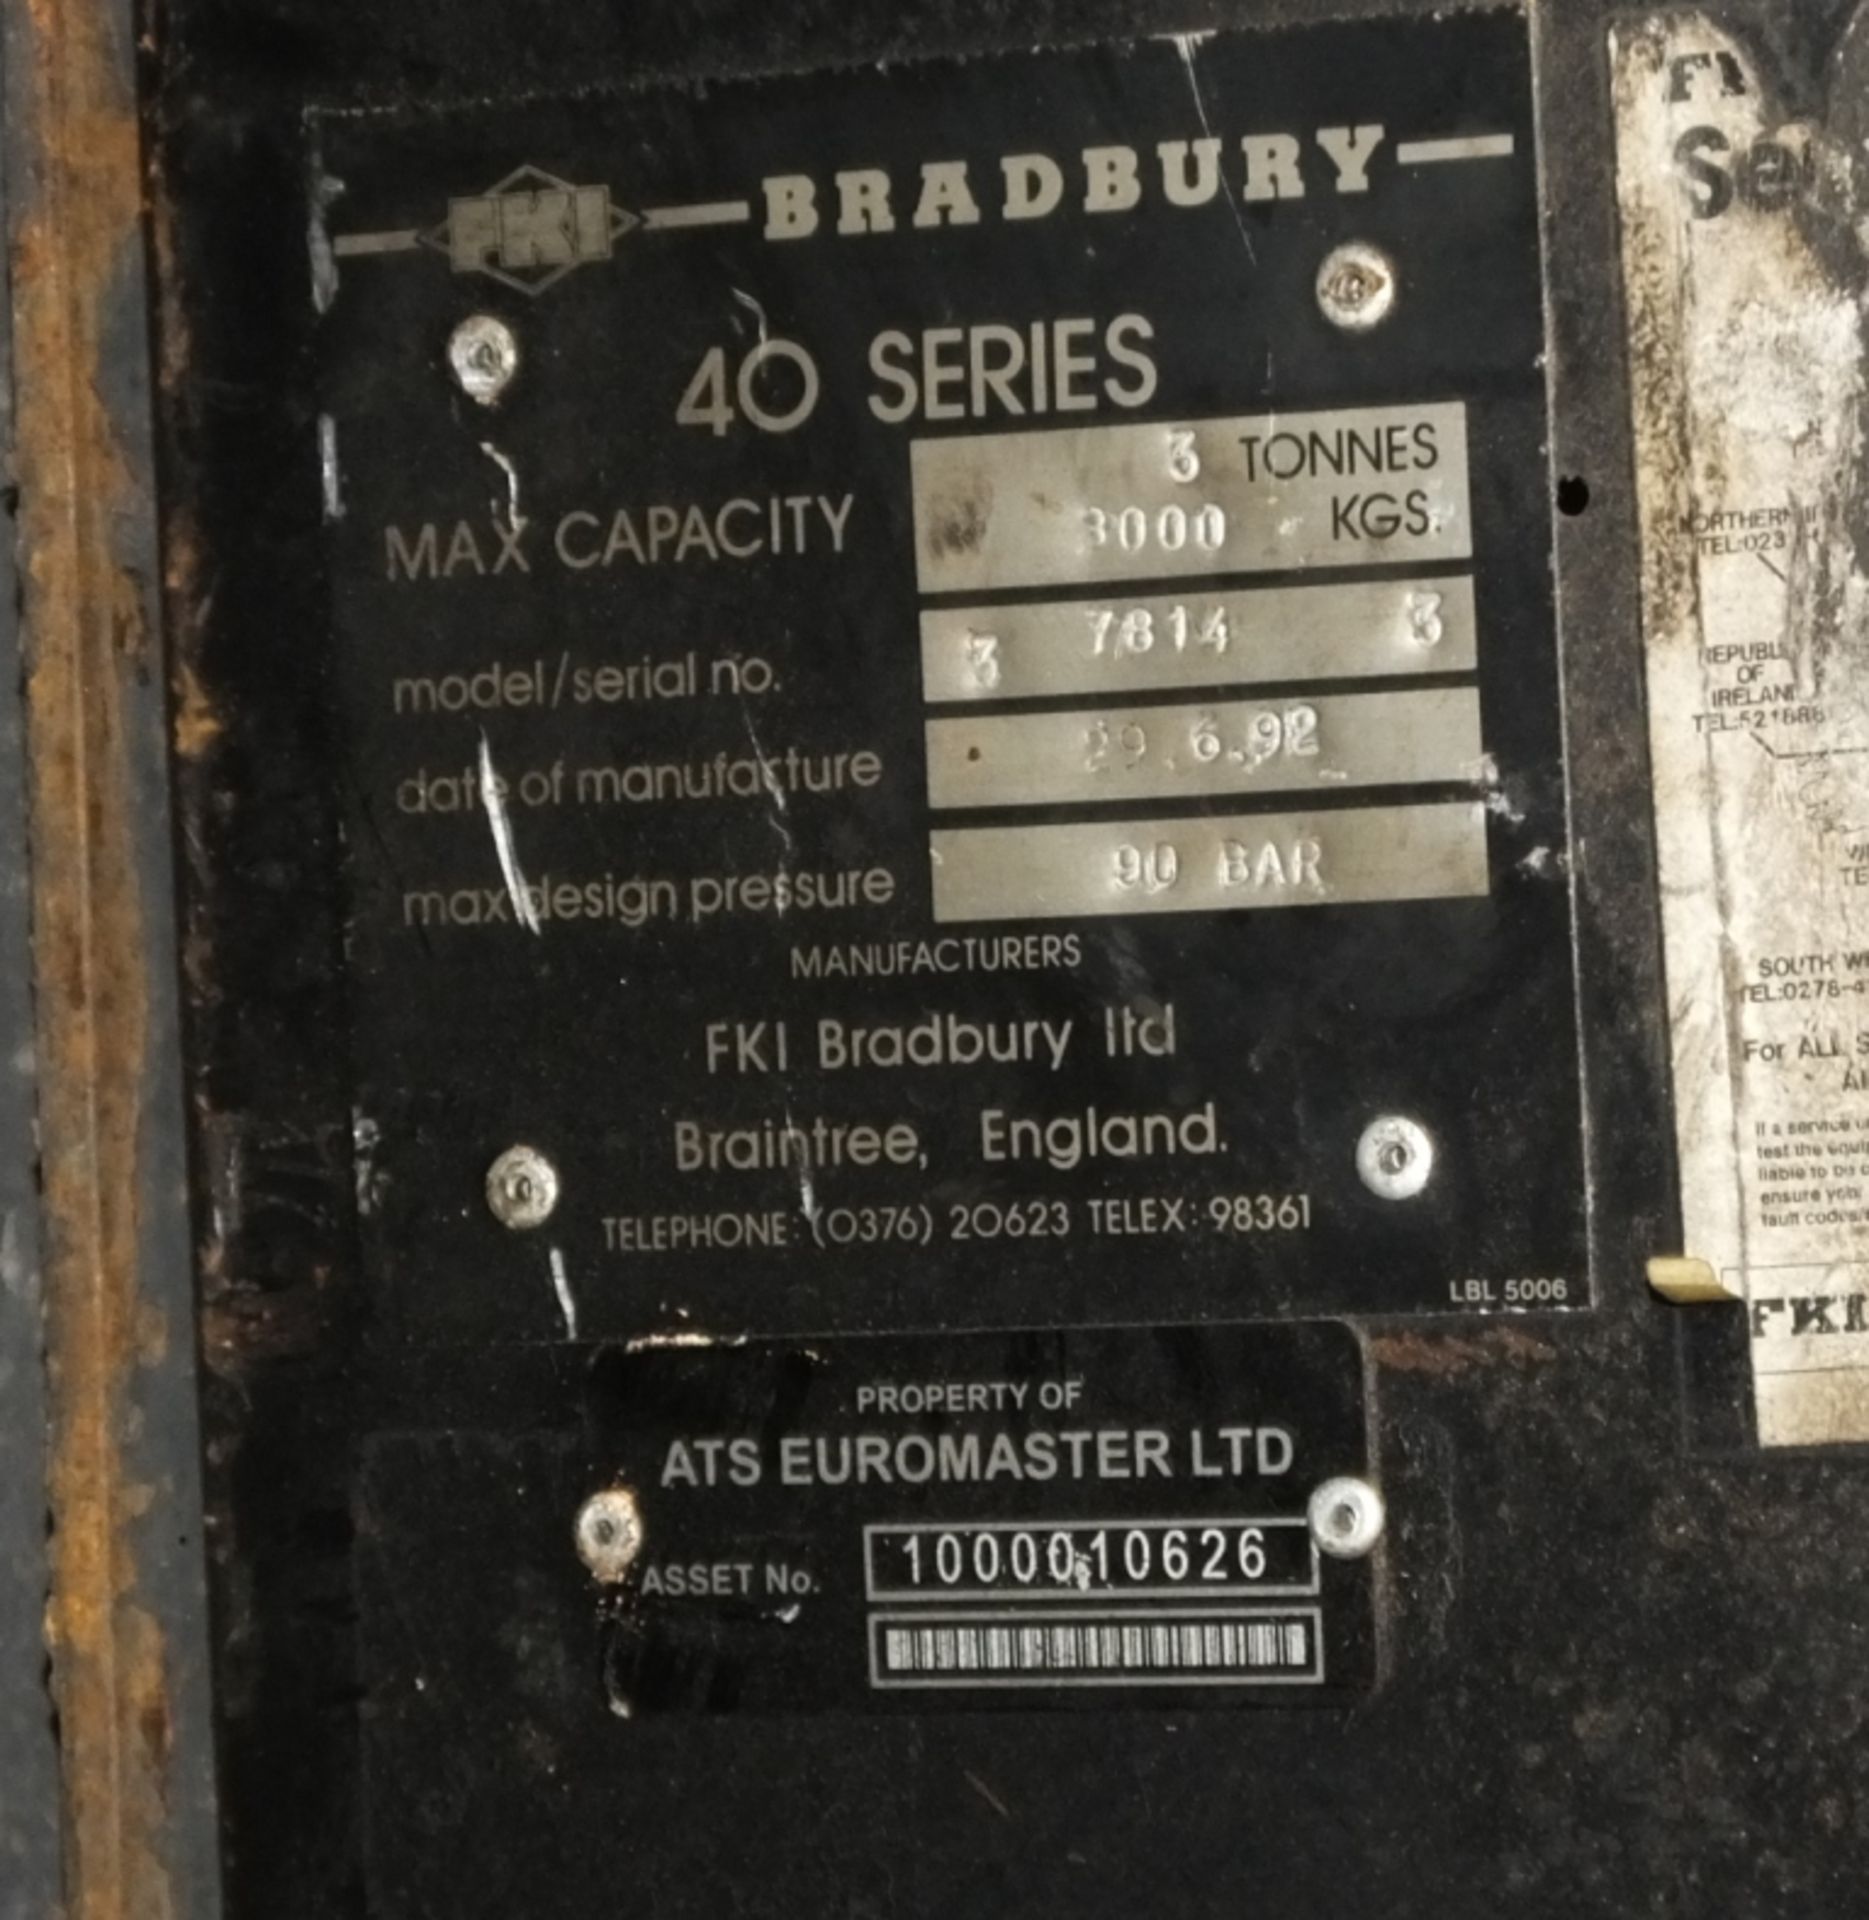 Bradbury 40 Series 7814 - 3 tonnes Vehicle Lift - Image 4 of 7